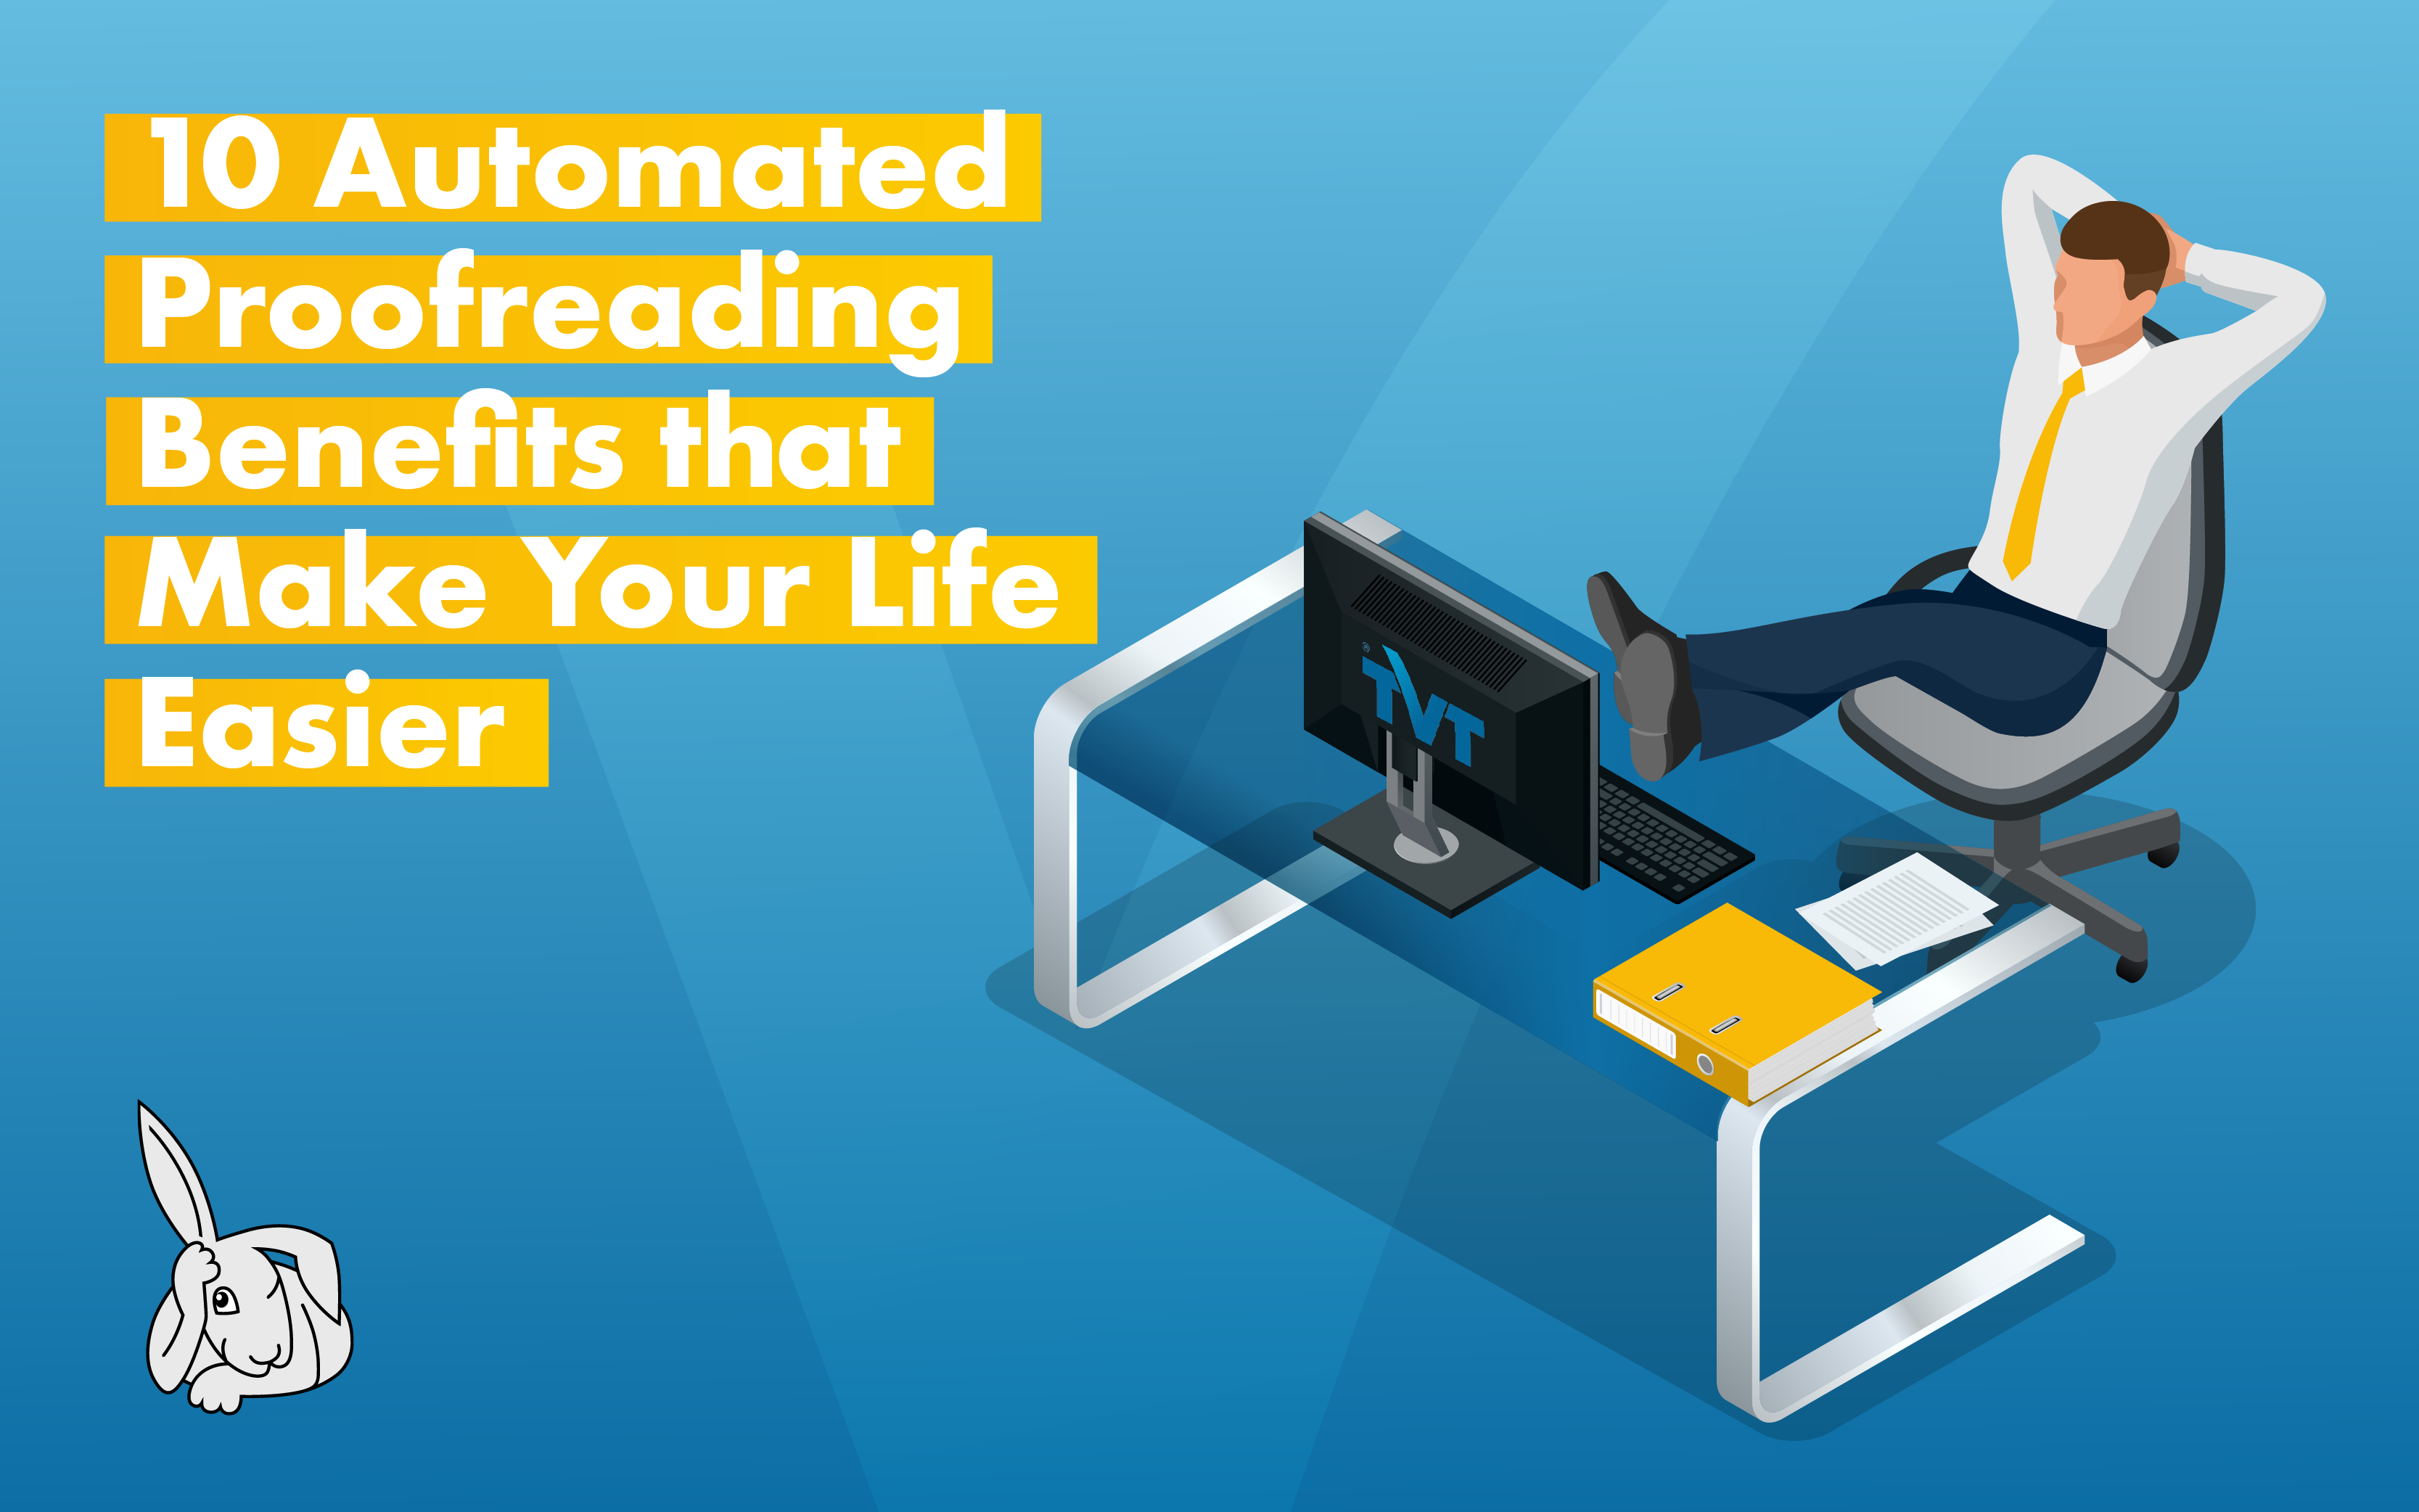 10 automated proofreading benefits